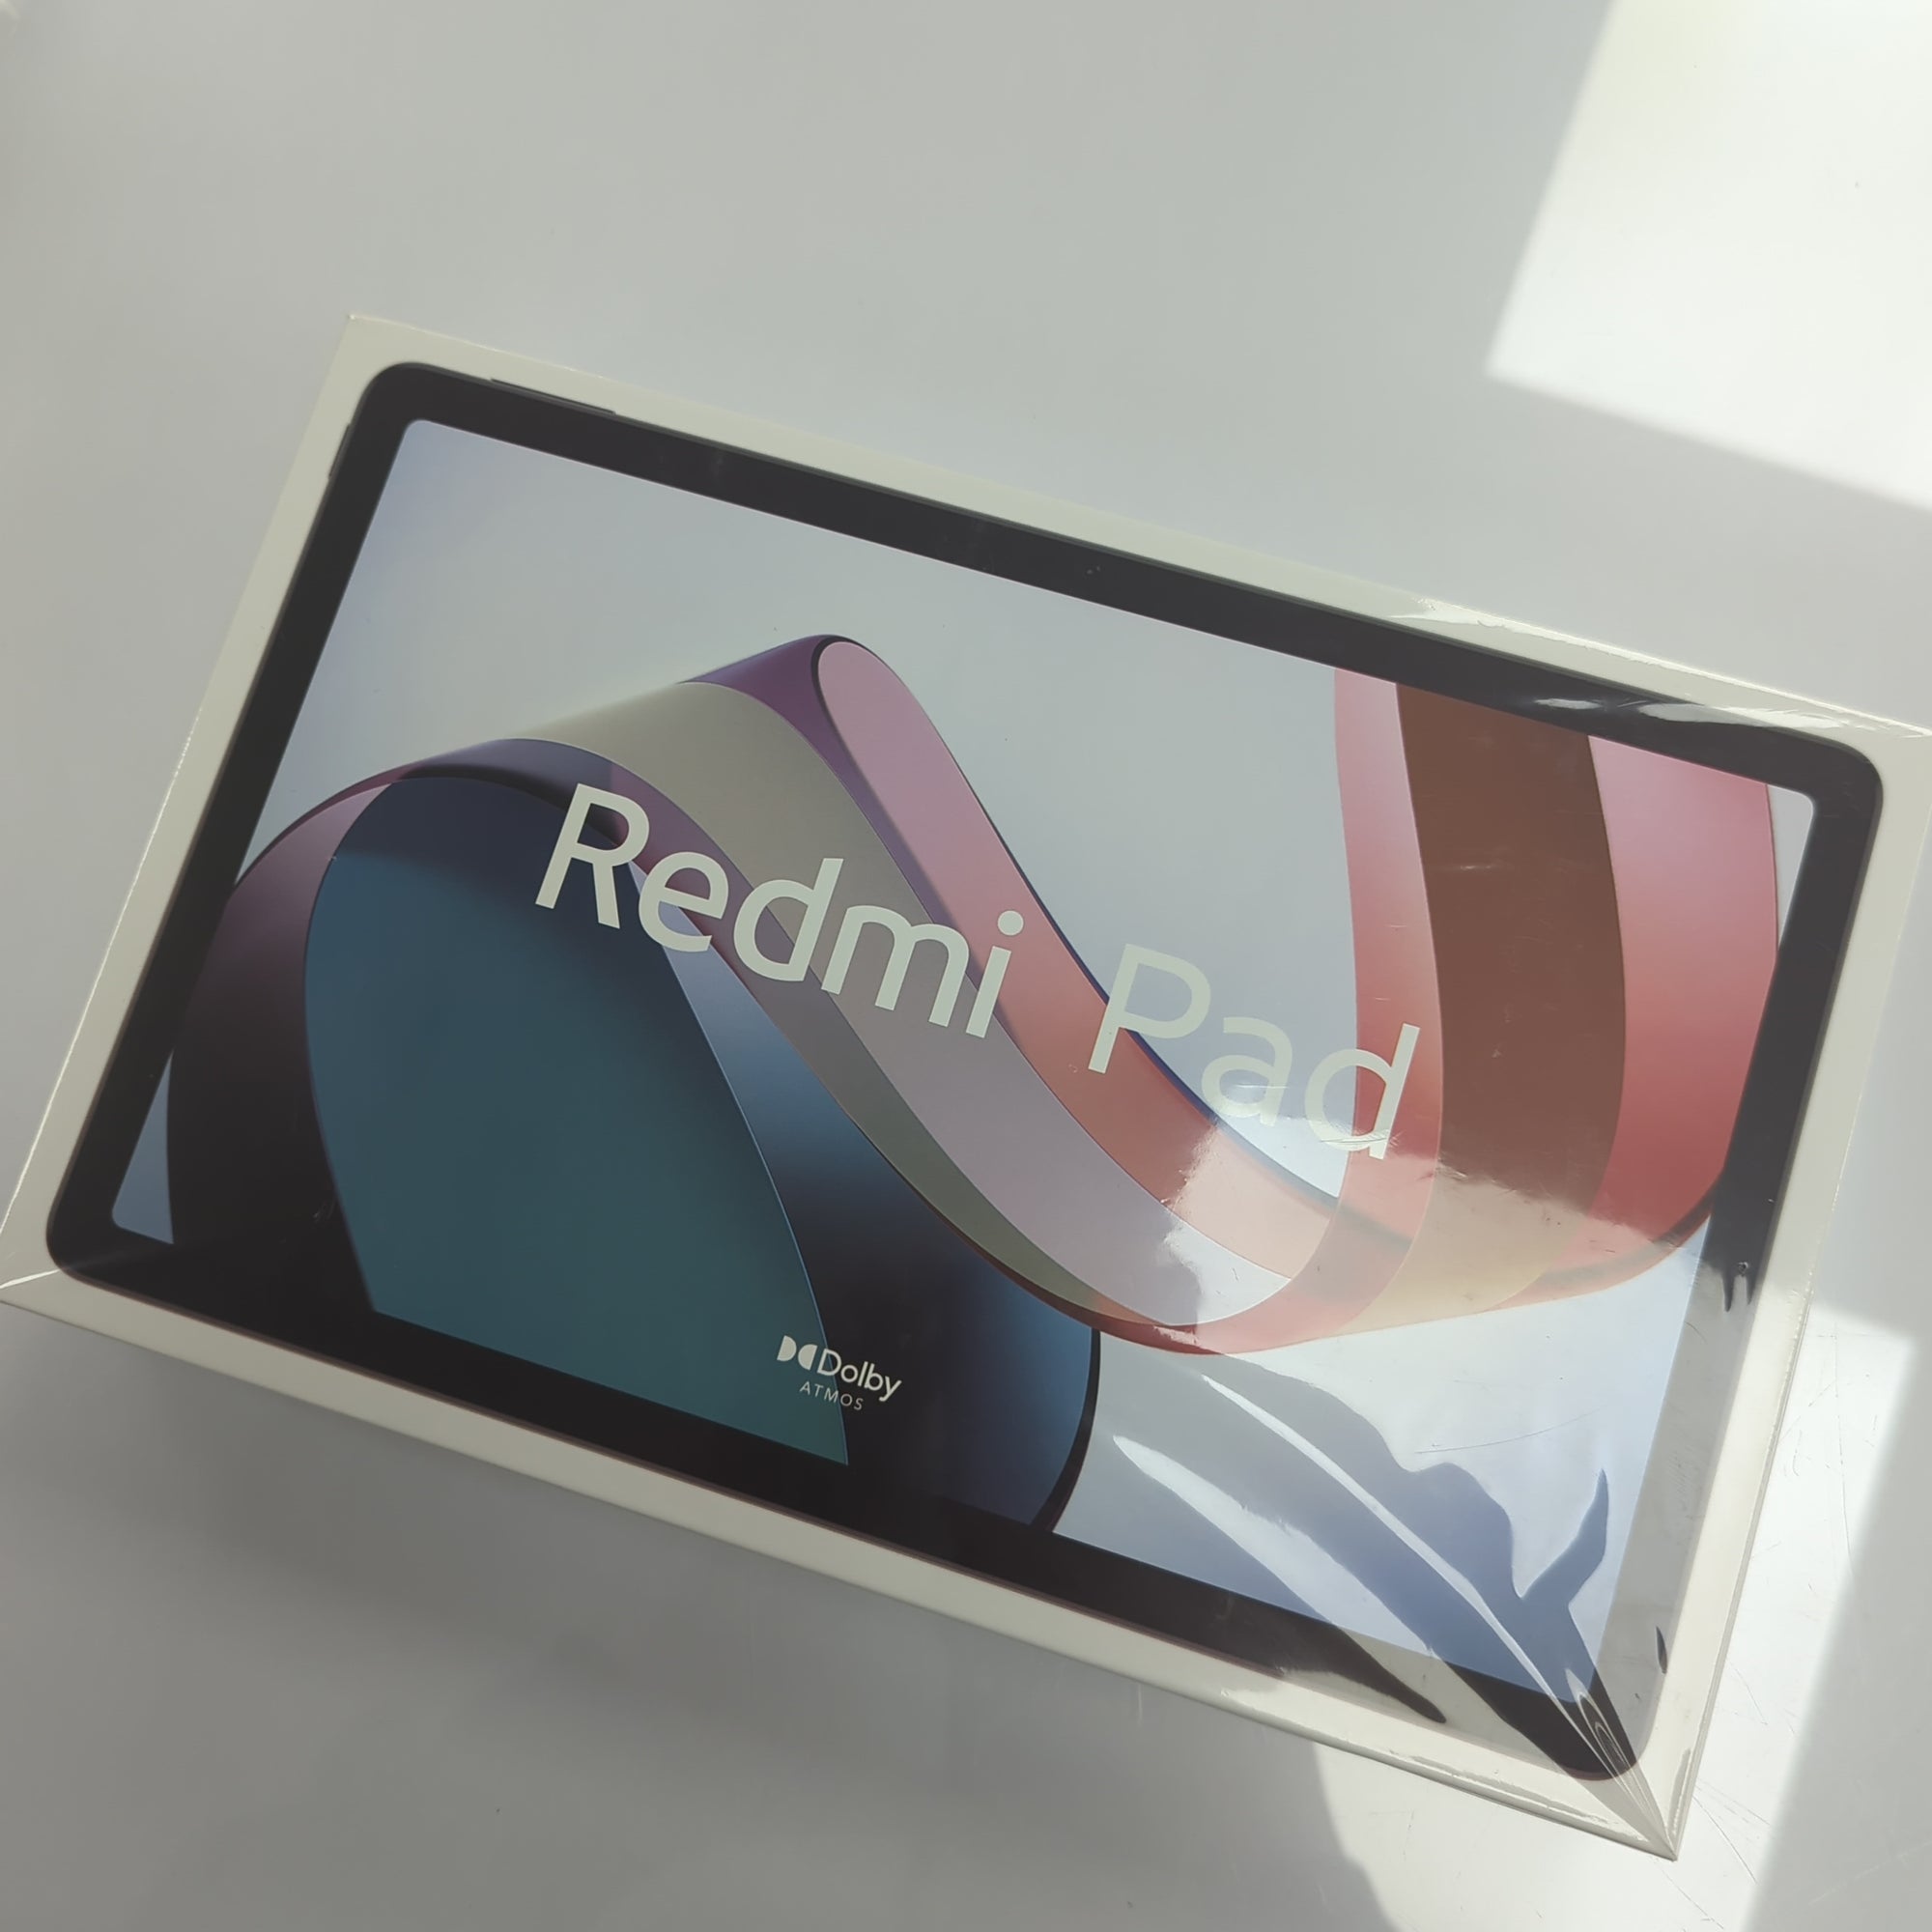 Redmi Pad Graphite Gray (128GB) Wi-Fi Only